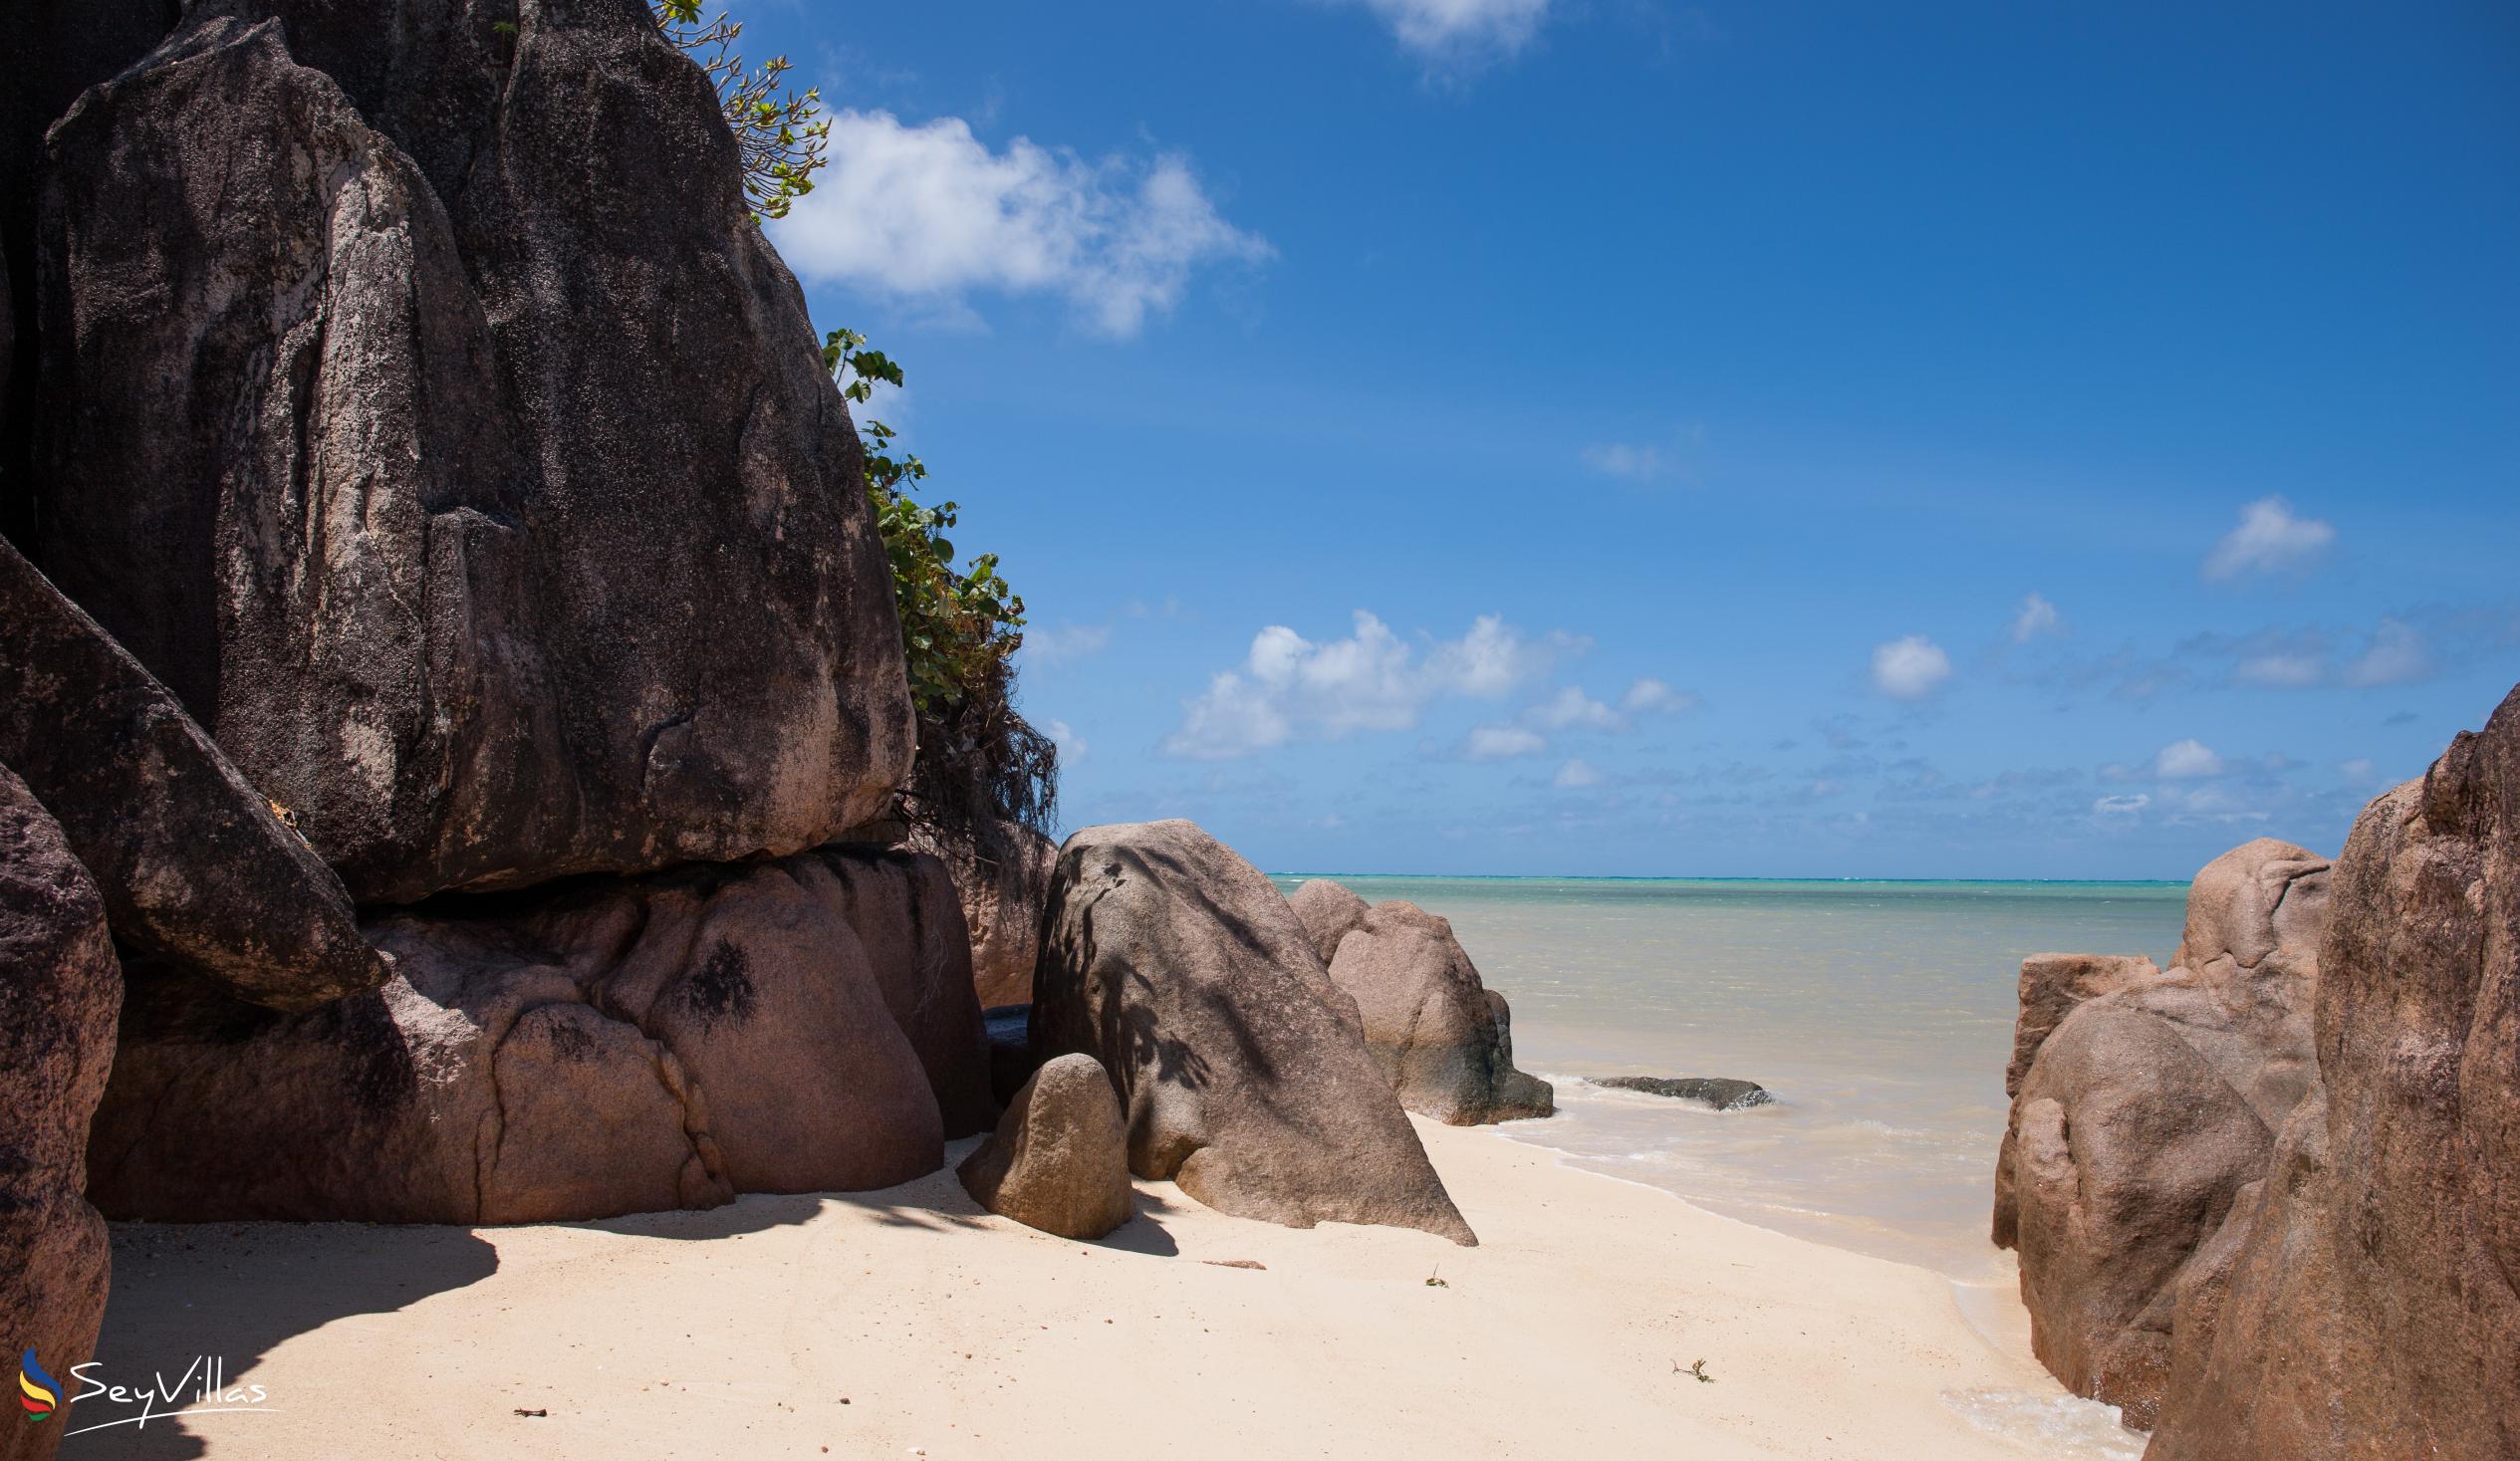 Photo 5: Anse Bateau - Praslin (Seychelles)